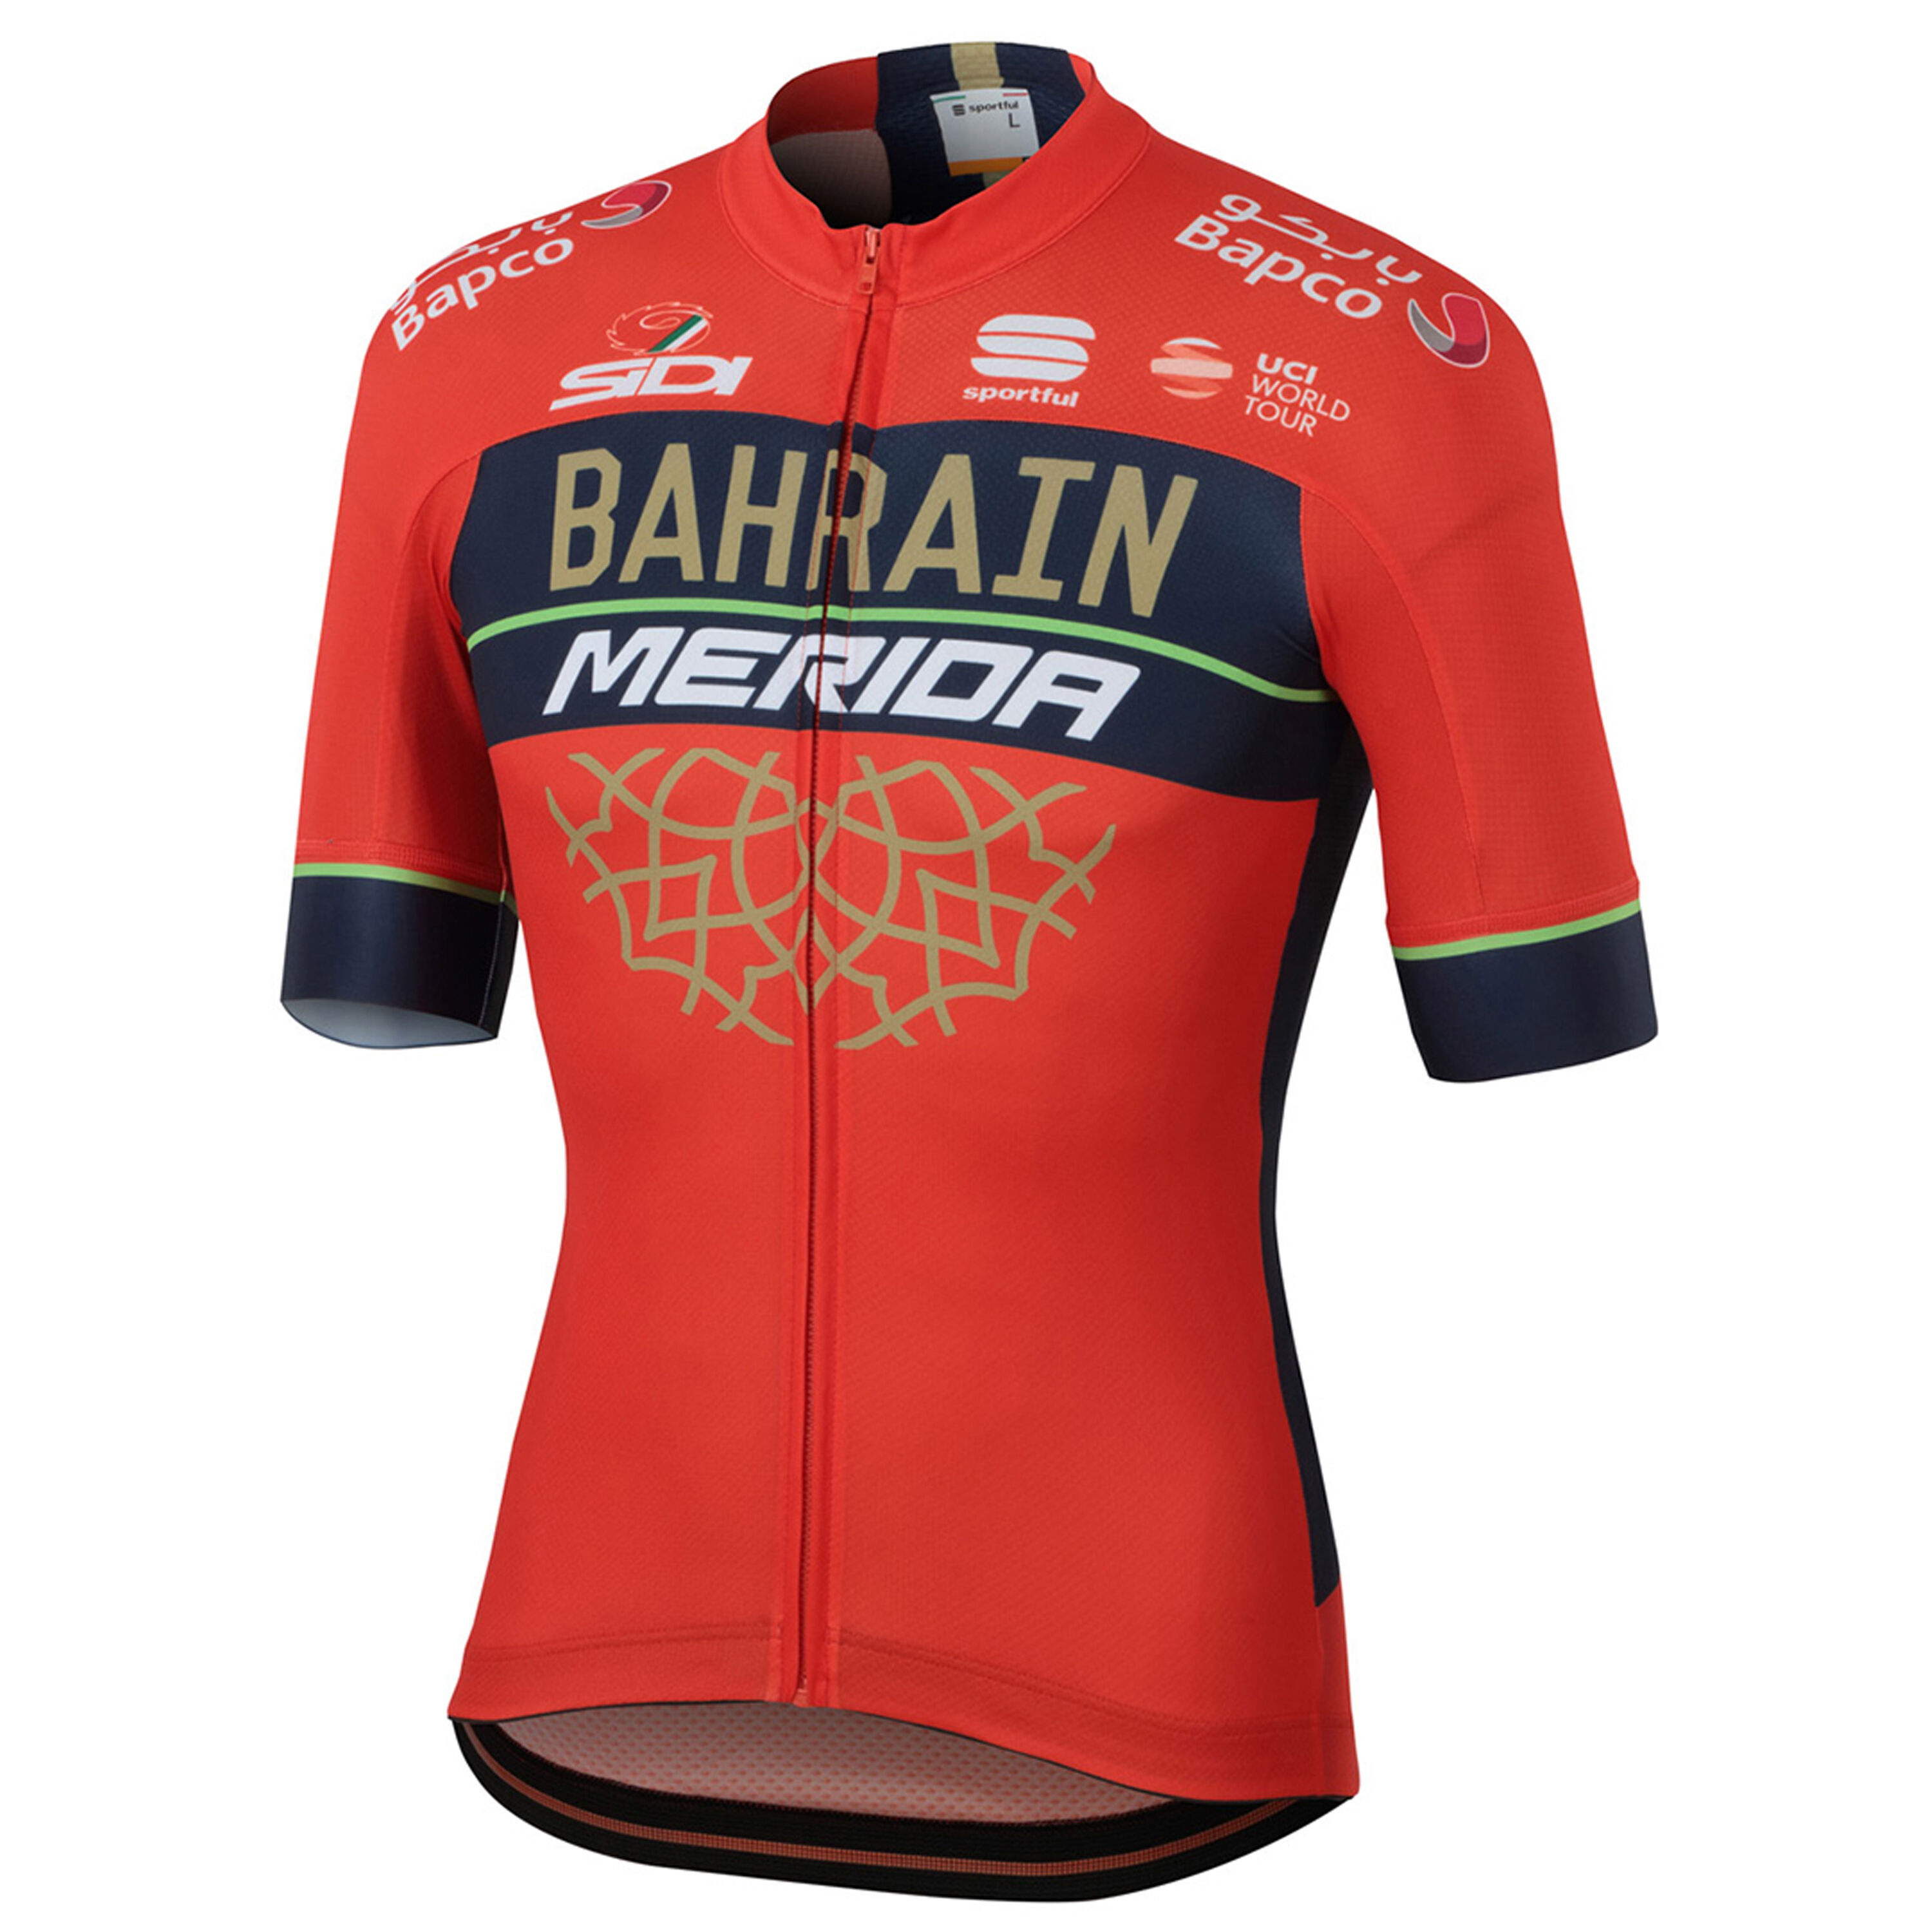 Bodyfit Pro Team Bahrain Merida jersey LordGun online